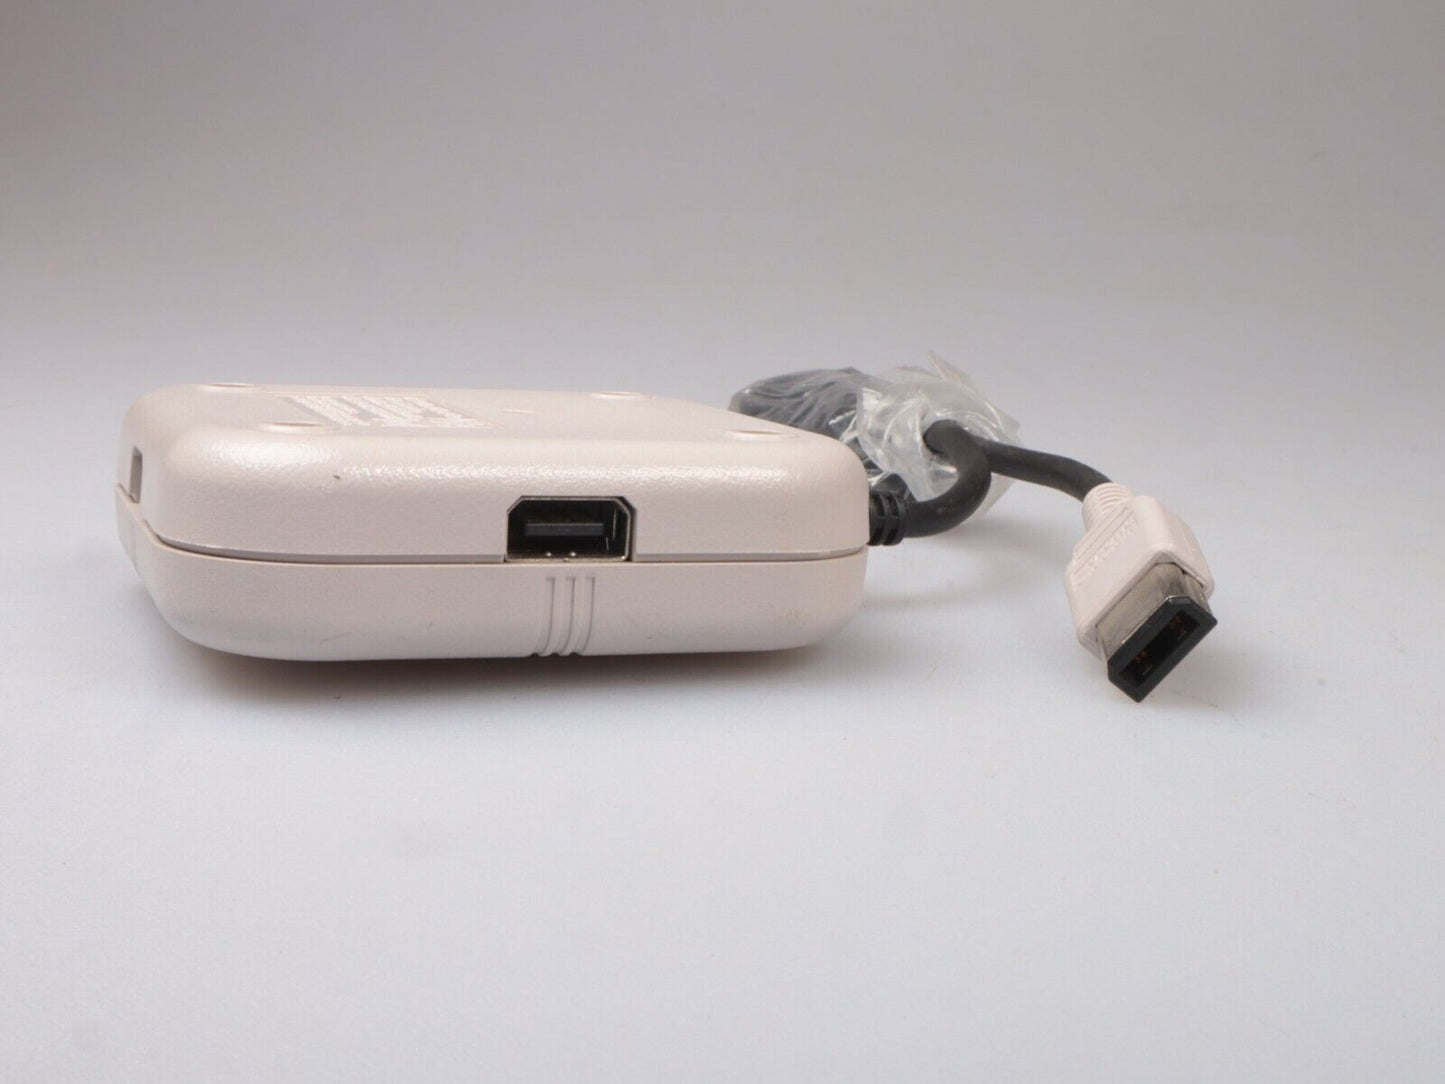 Gameboy | 4-persoonsadapter Game Boy Nintendo Game DMG-07 